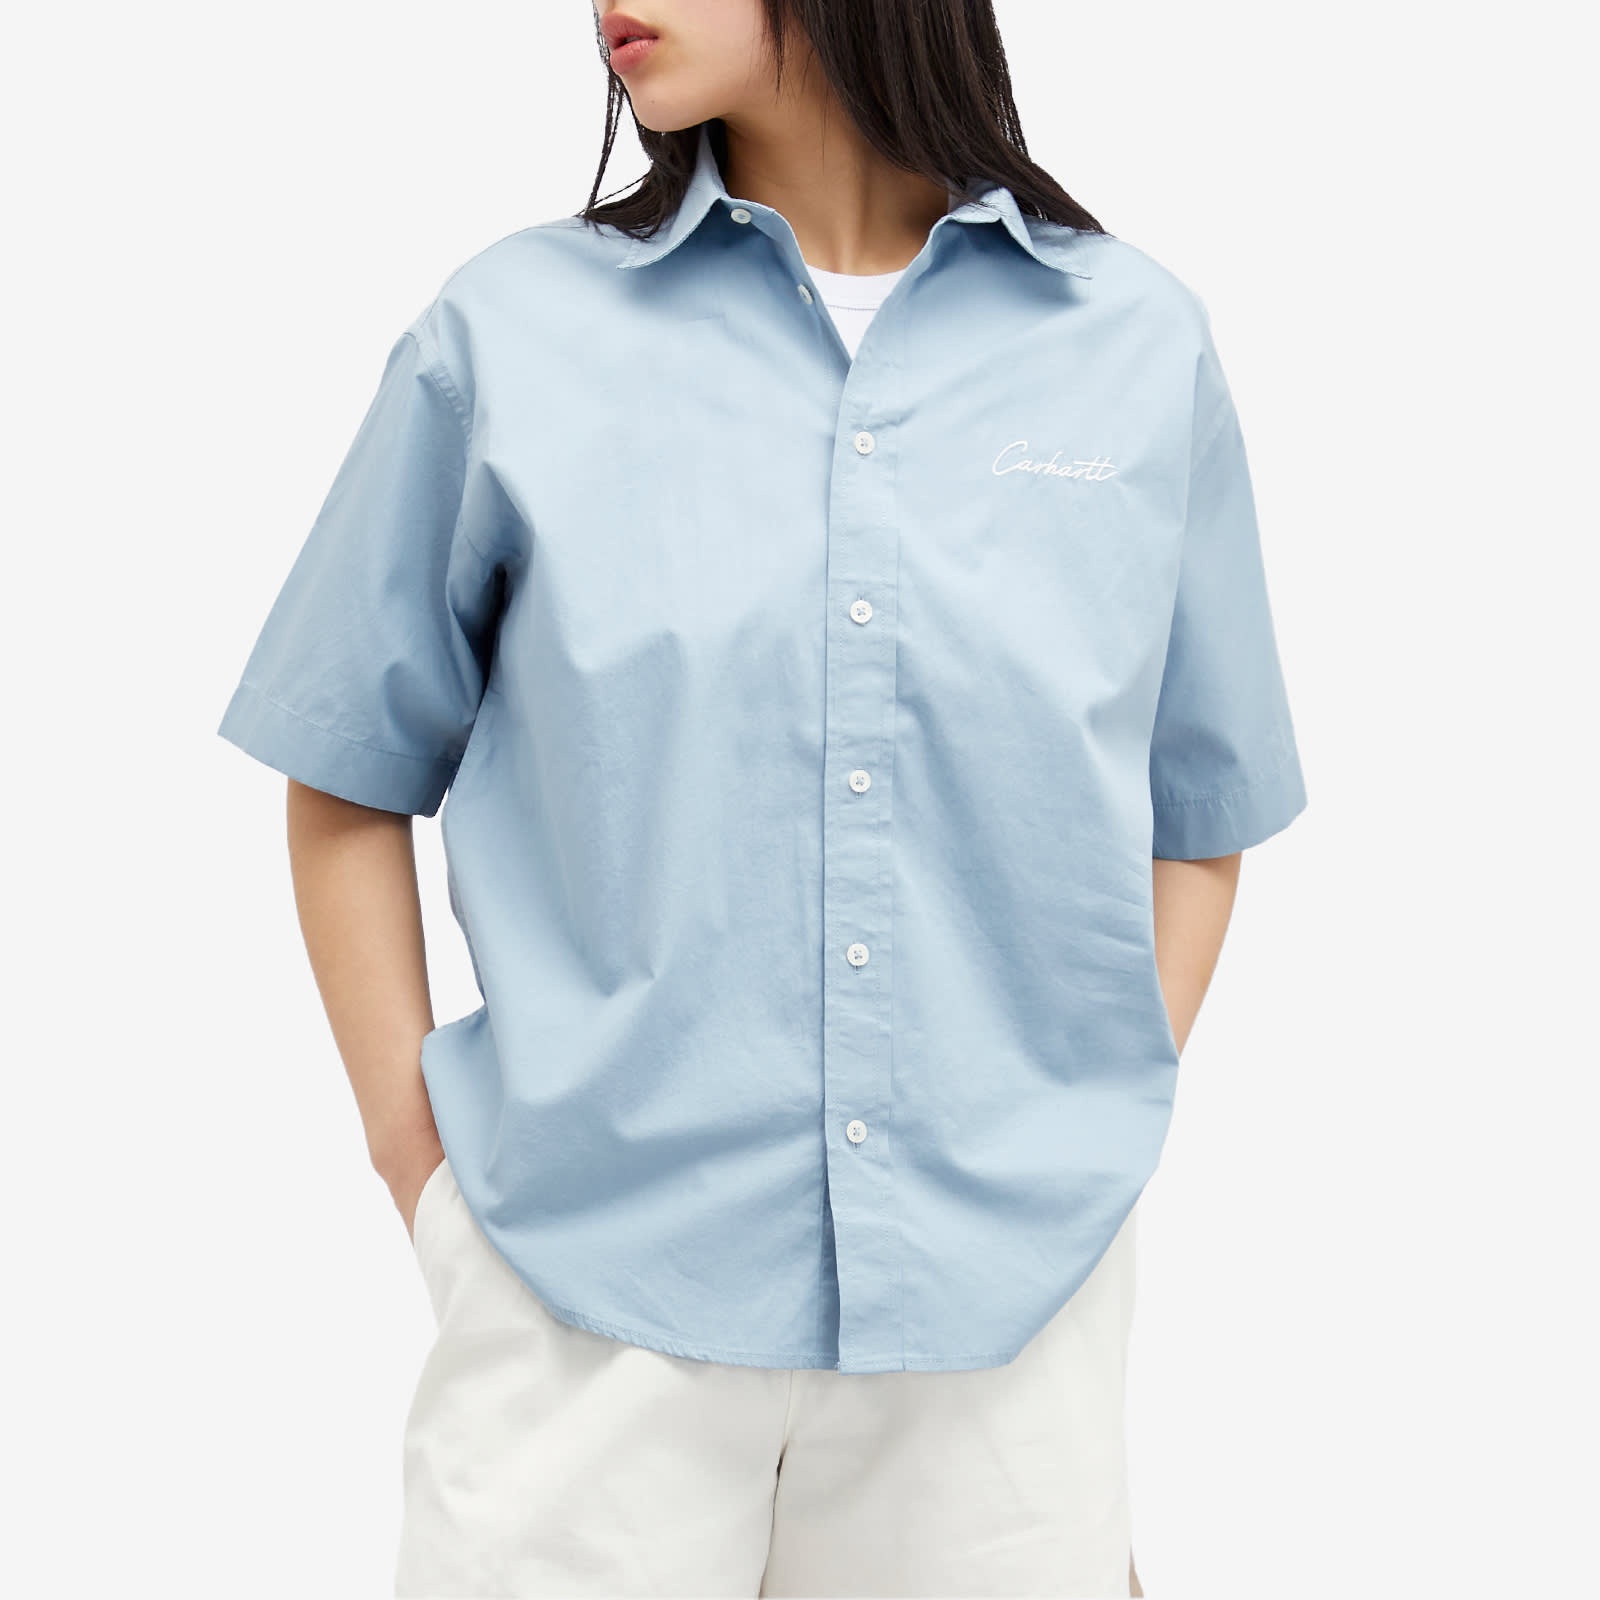 Carhartt WIP Short Sleeve Jaxon Shirt - 2